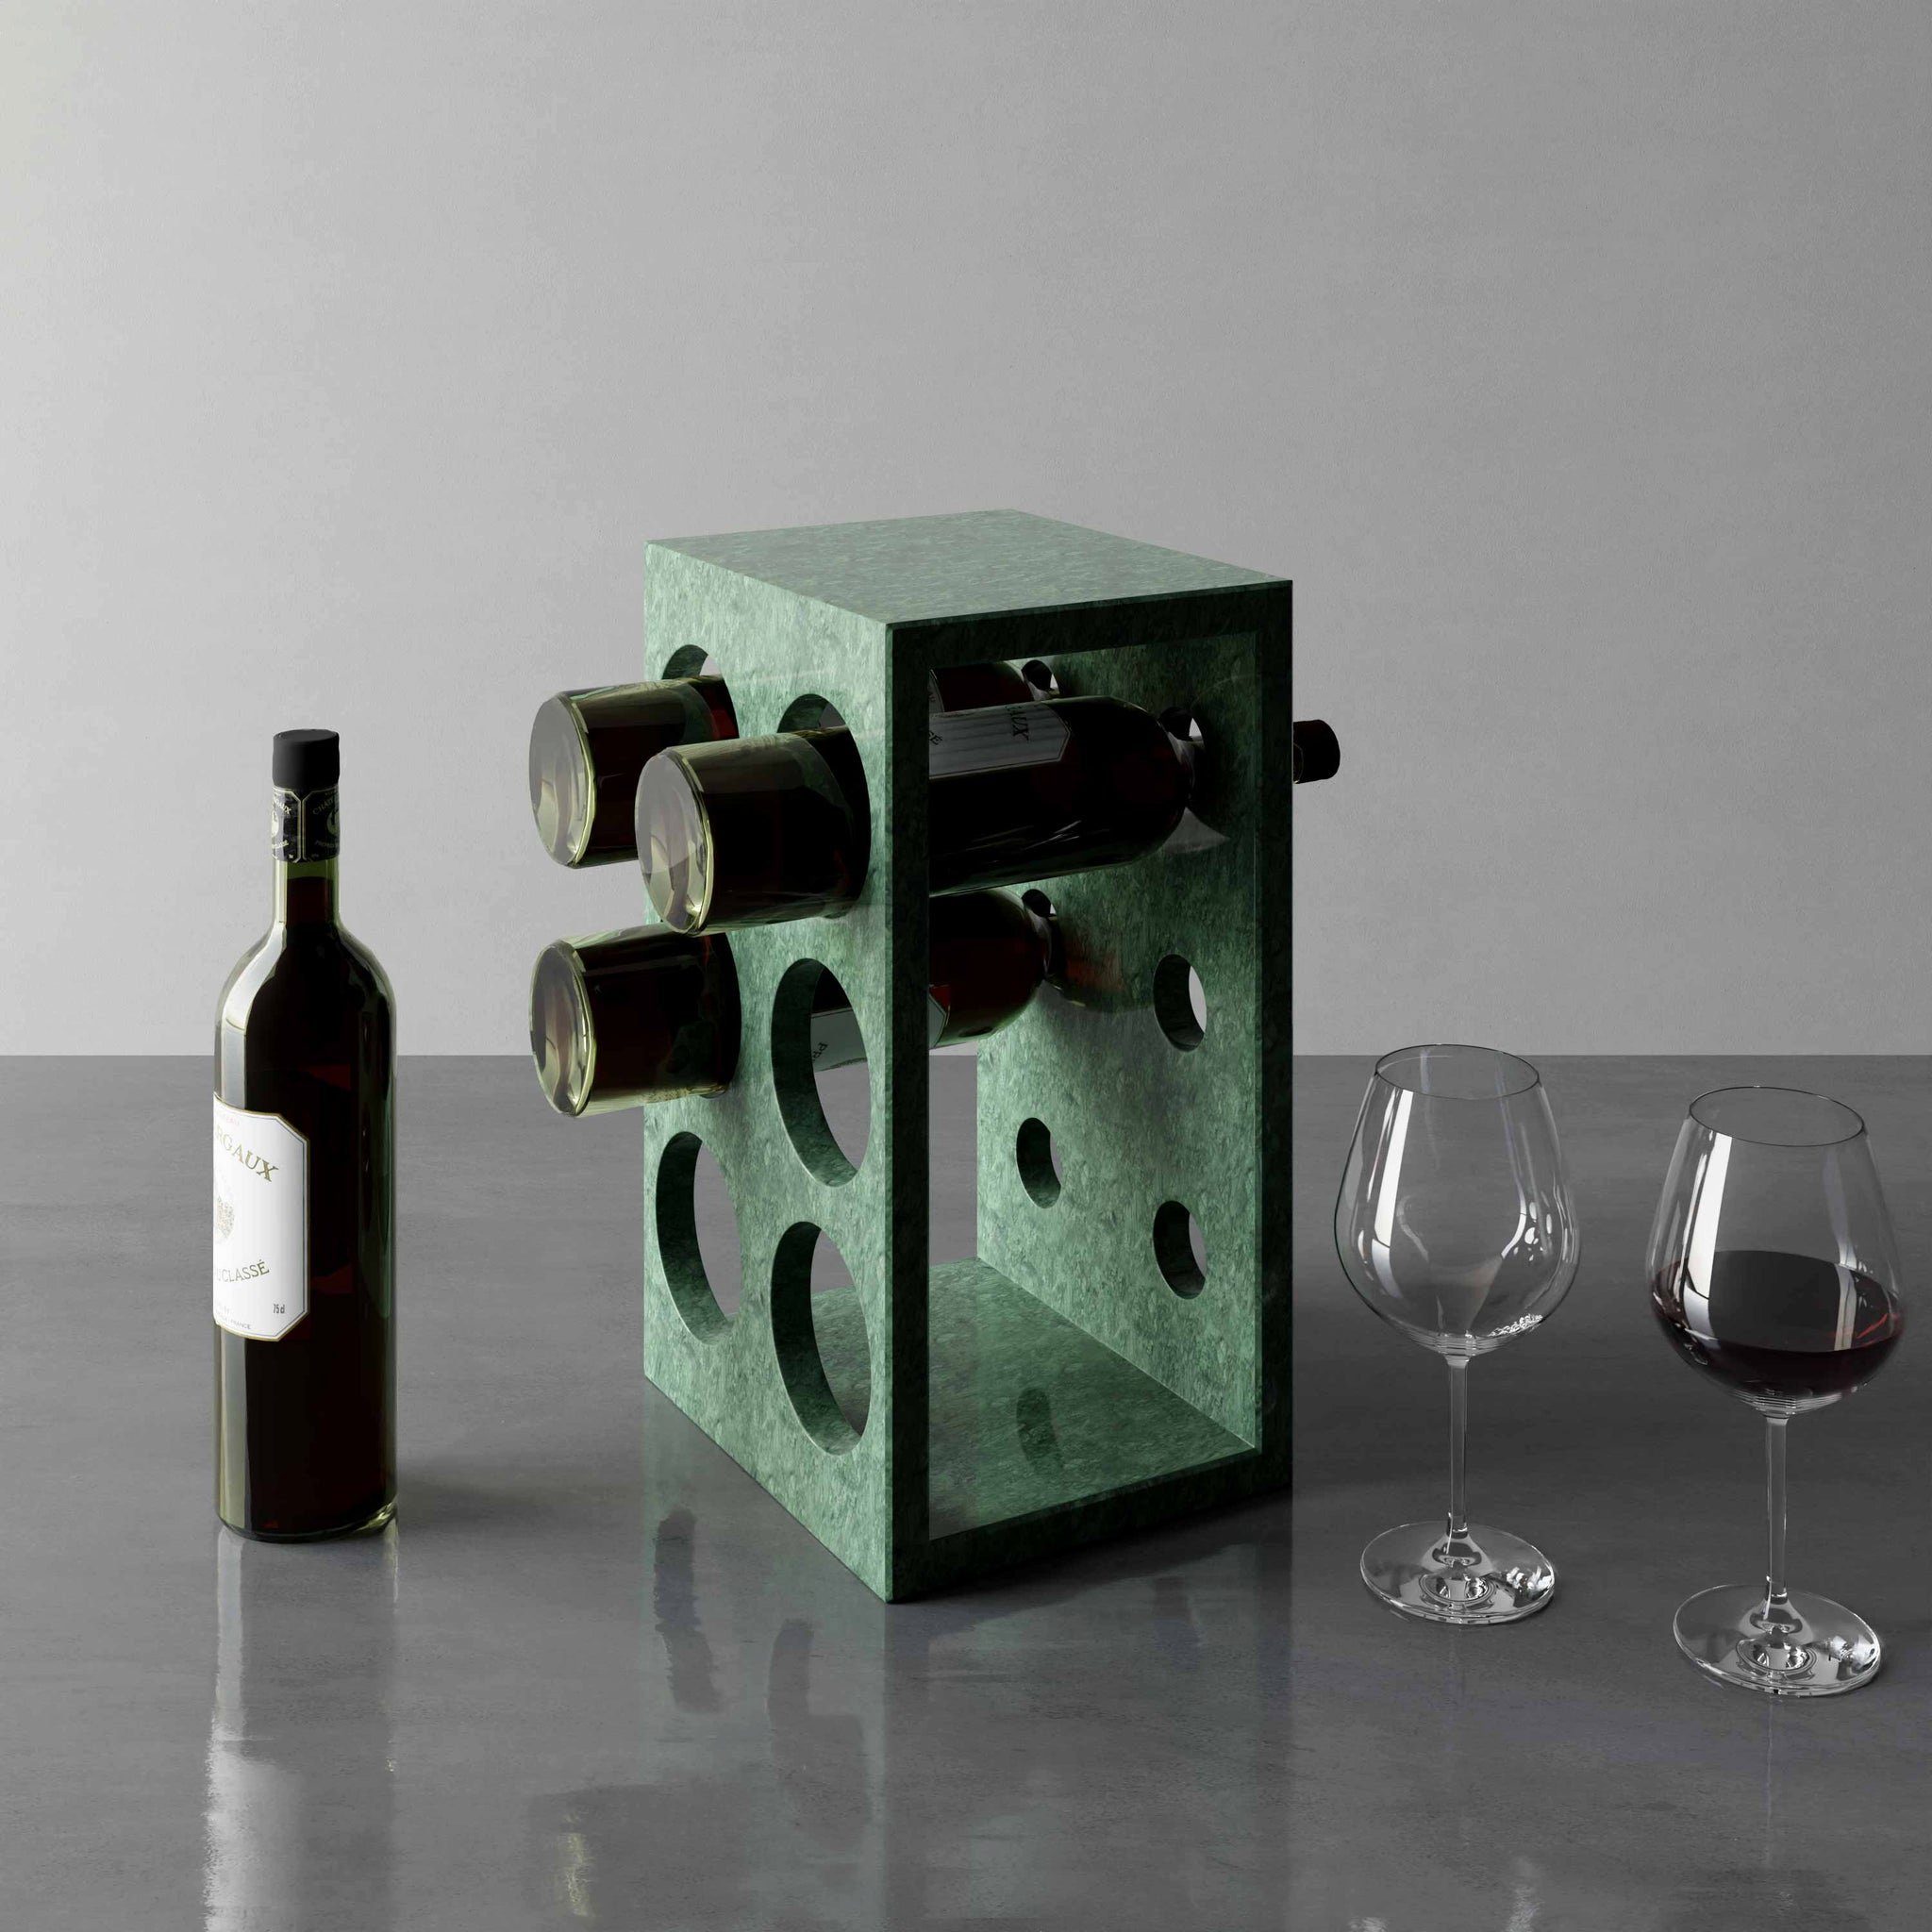 MAGNA Atelier Weinregal CAPE TOWN aus Marmor, Weinregal, Weinflaschenhalter, echter Marmor, 20x24x39cm